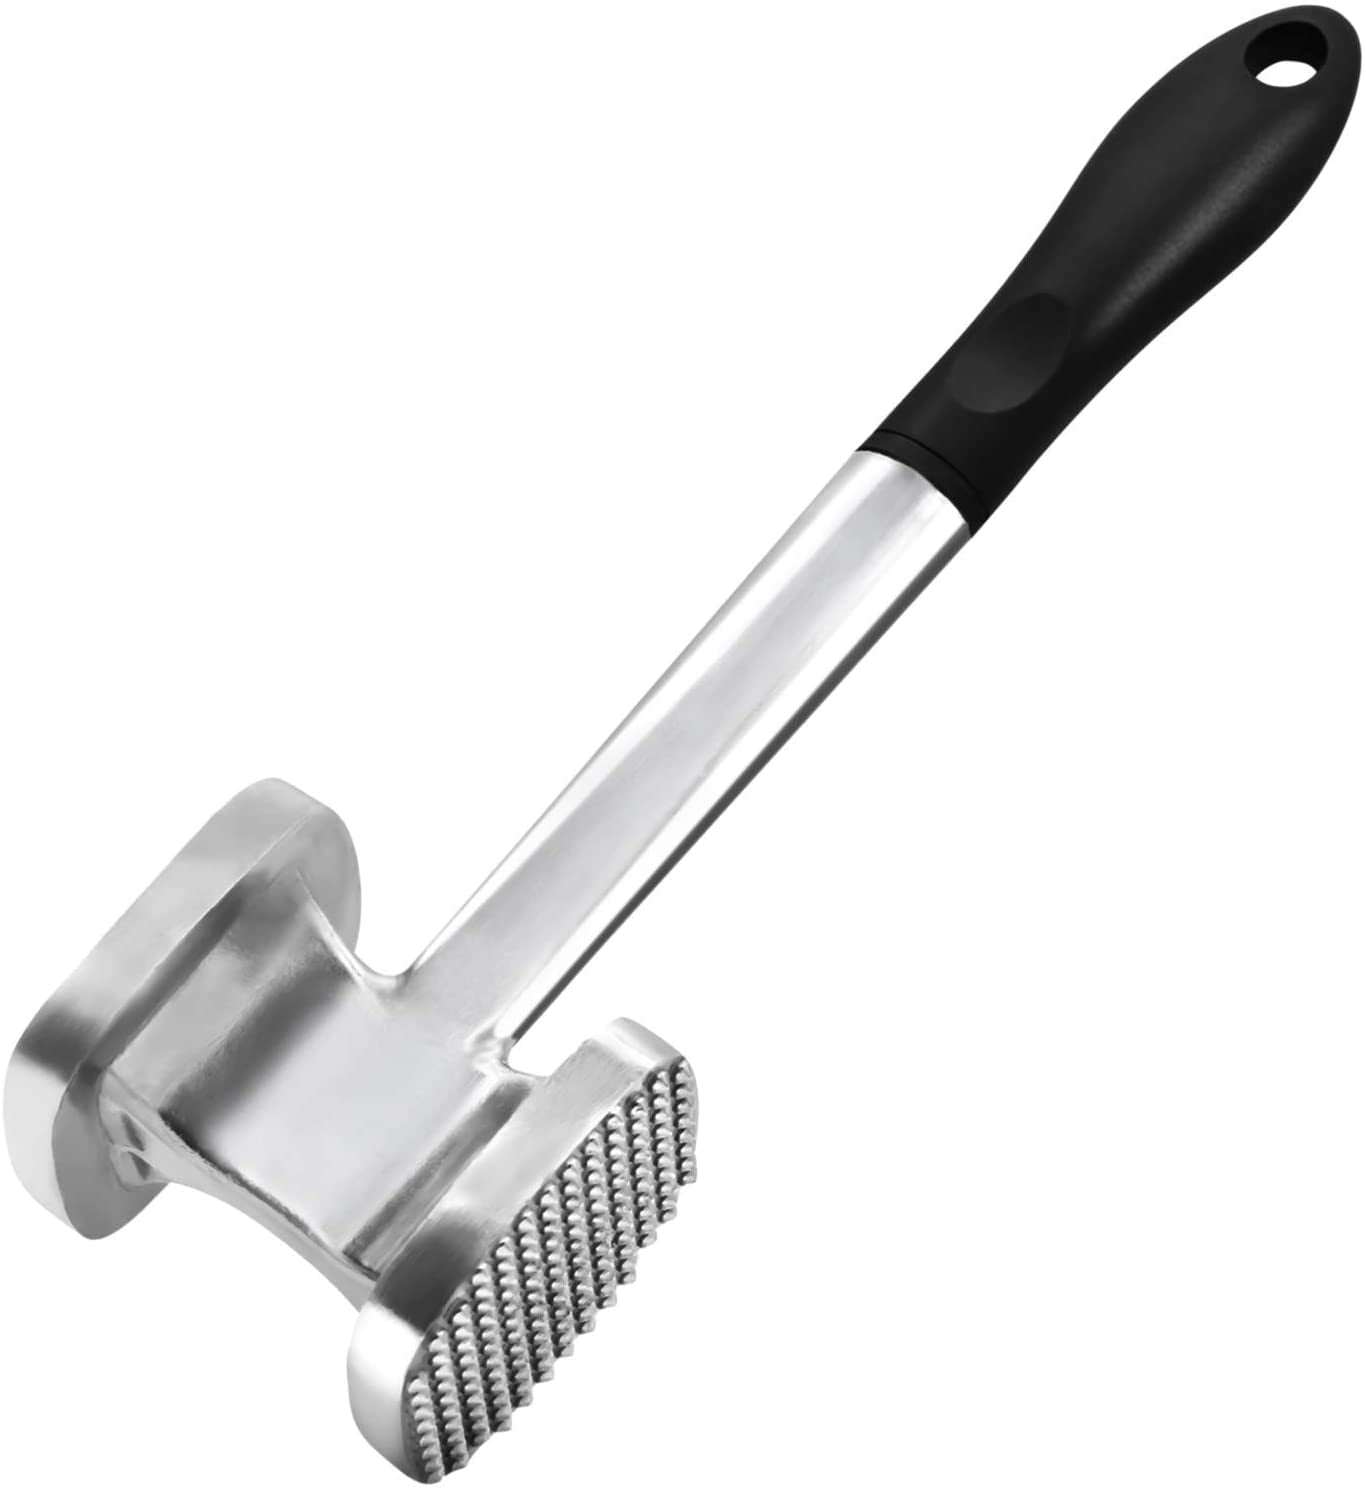 Large Size Meat Tenderizer Hammer. Practical Design Meat Mallet